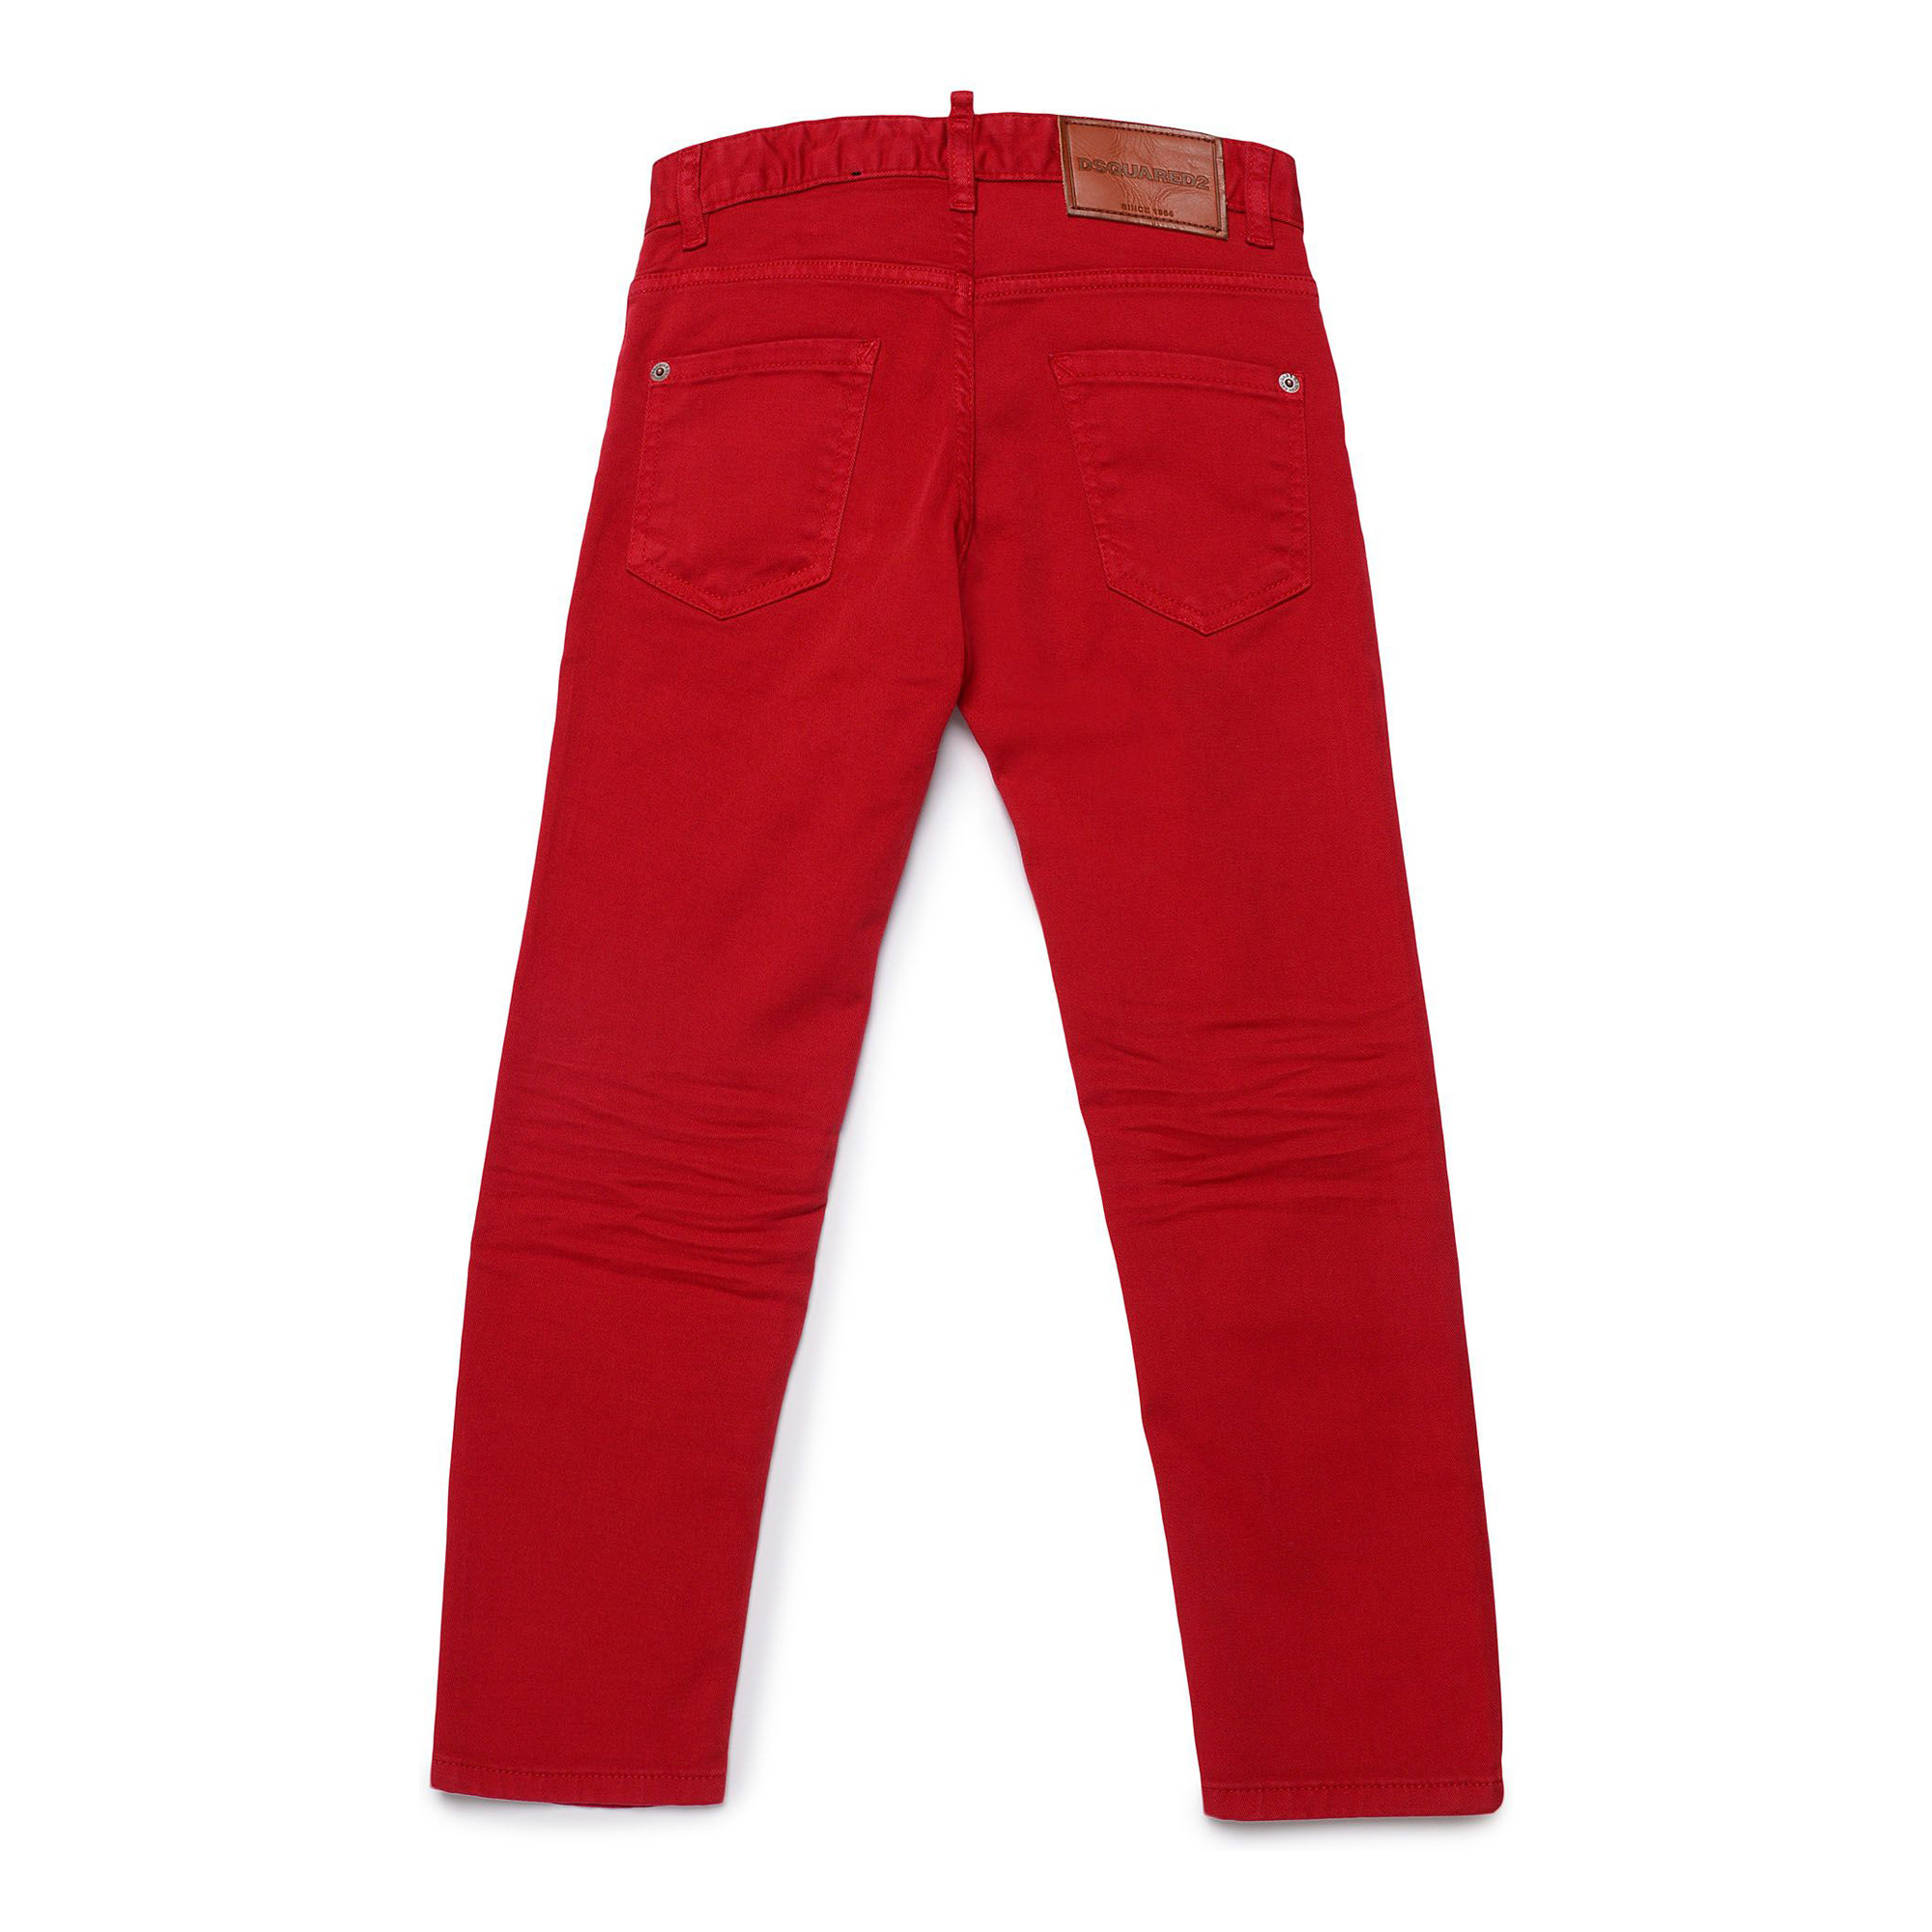 Dsquared - jeans - coupe regular et coupe droite - coton - rouge - Veepee